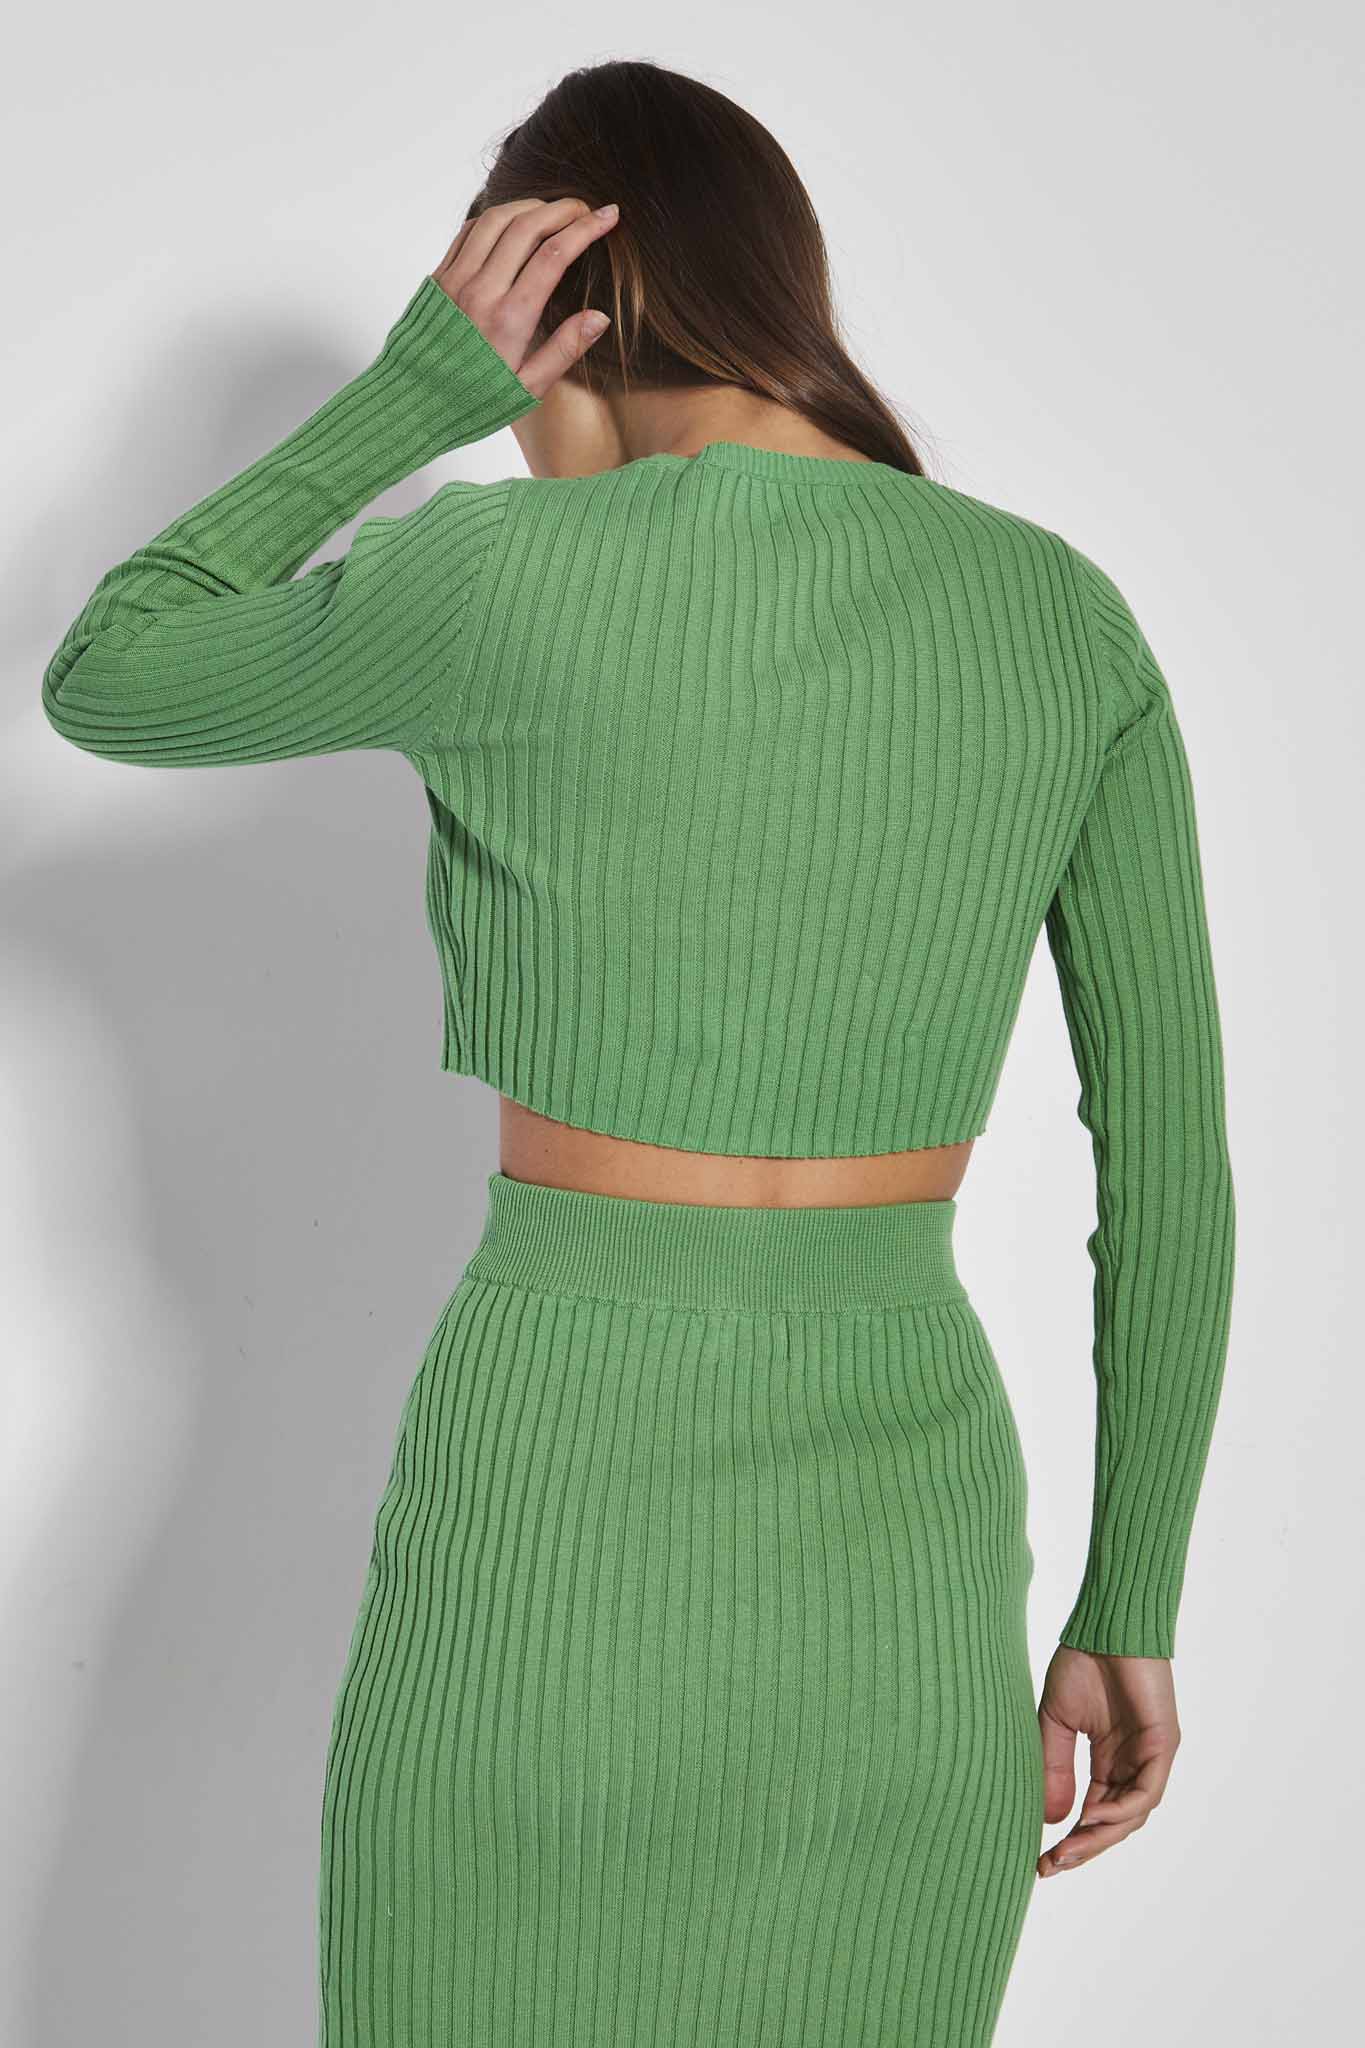 Glamorous Care Apple Green Rib Knit Long Sleeve Crop Top